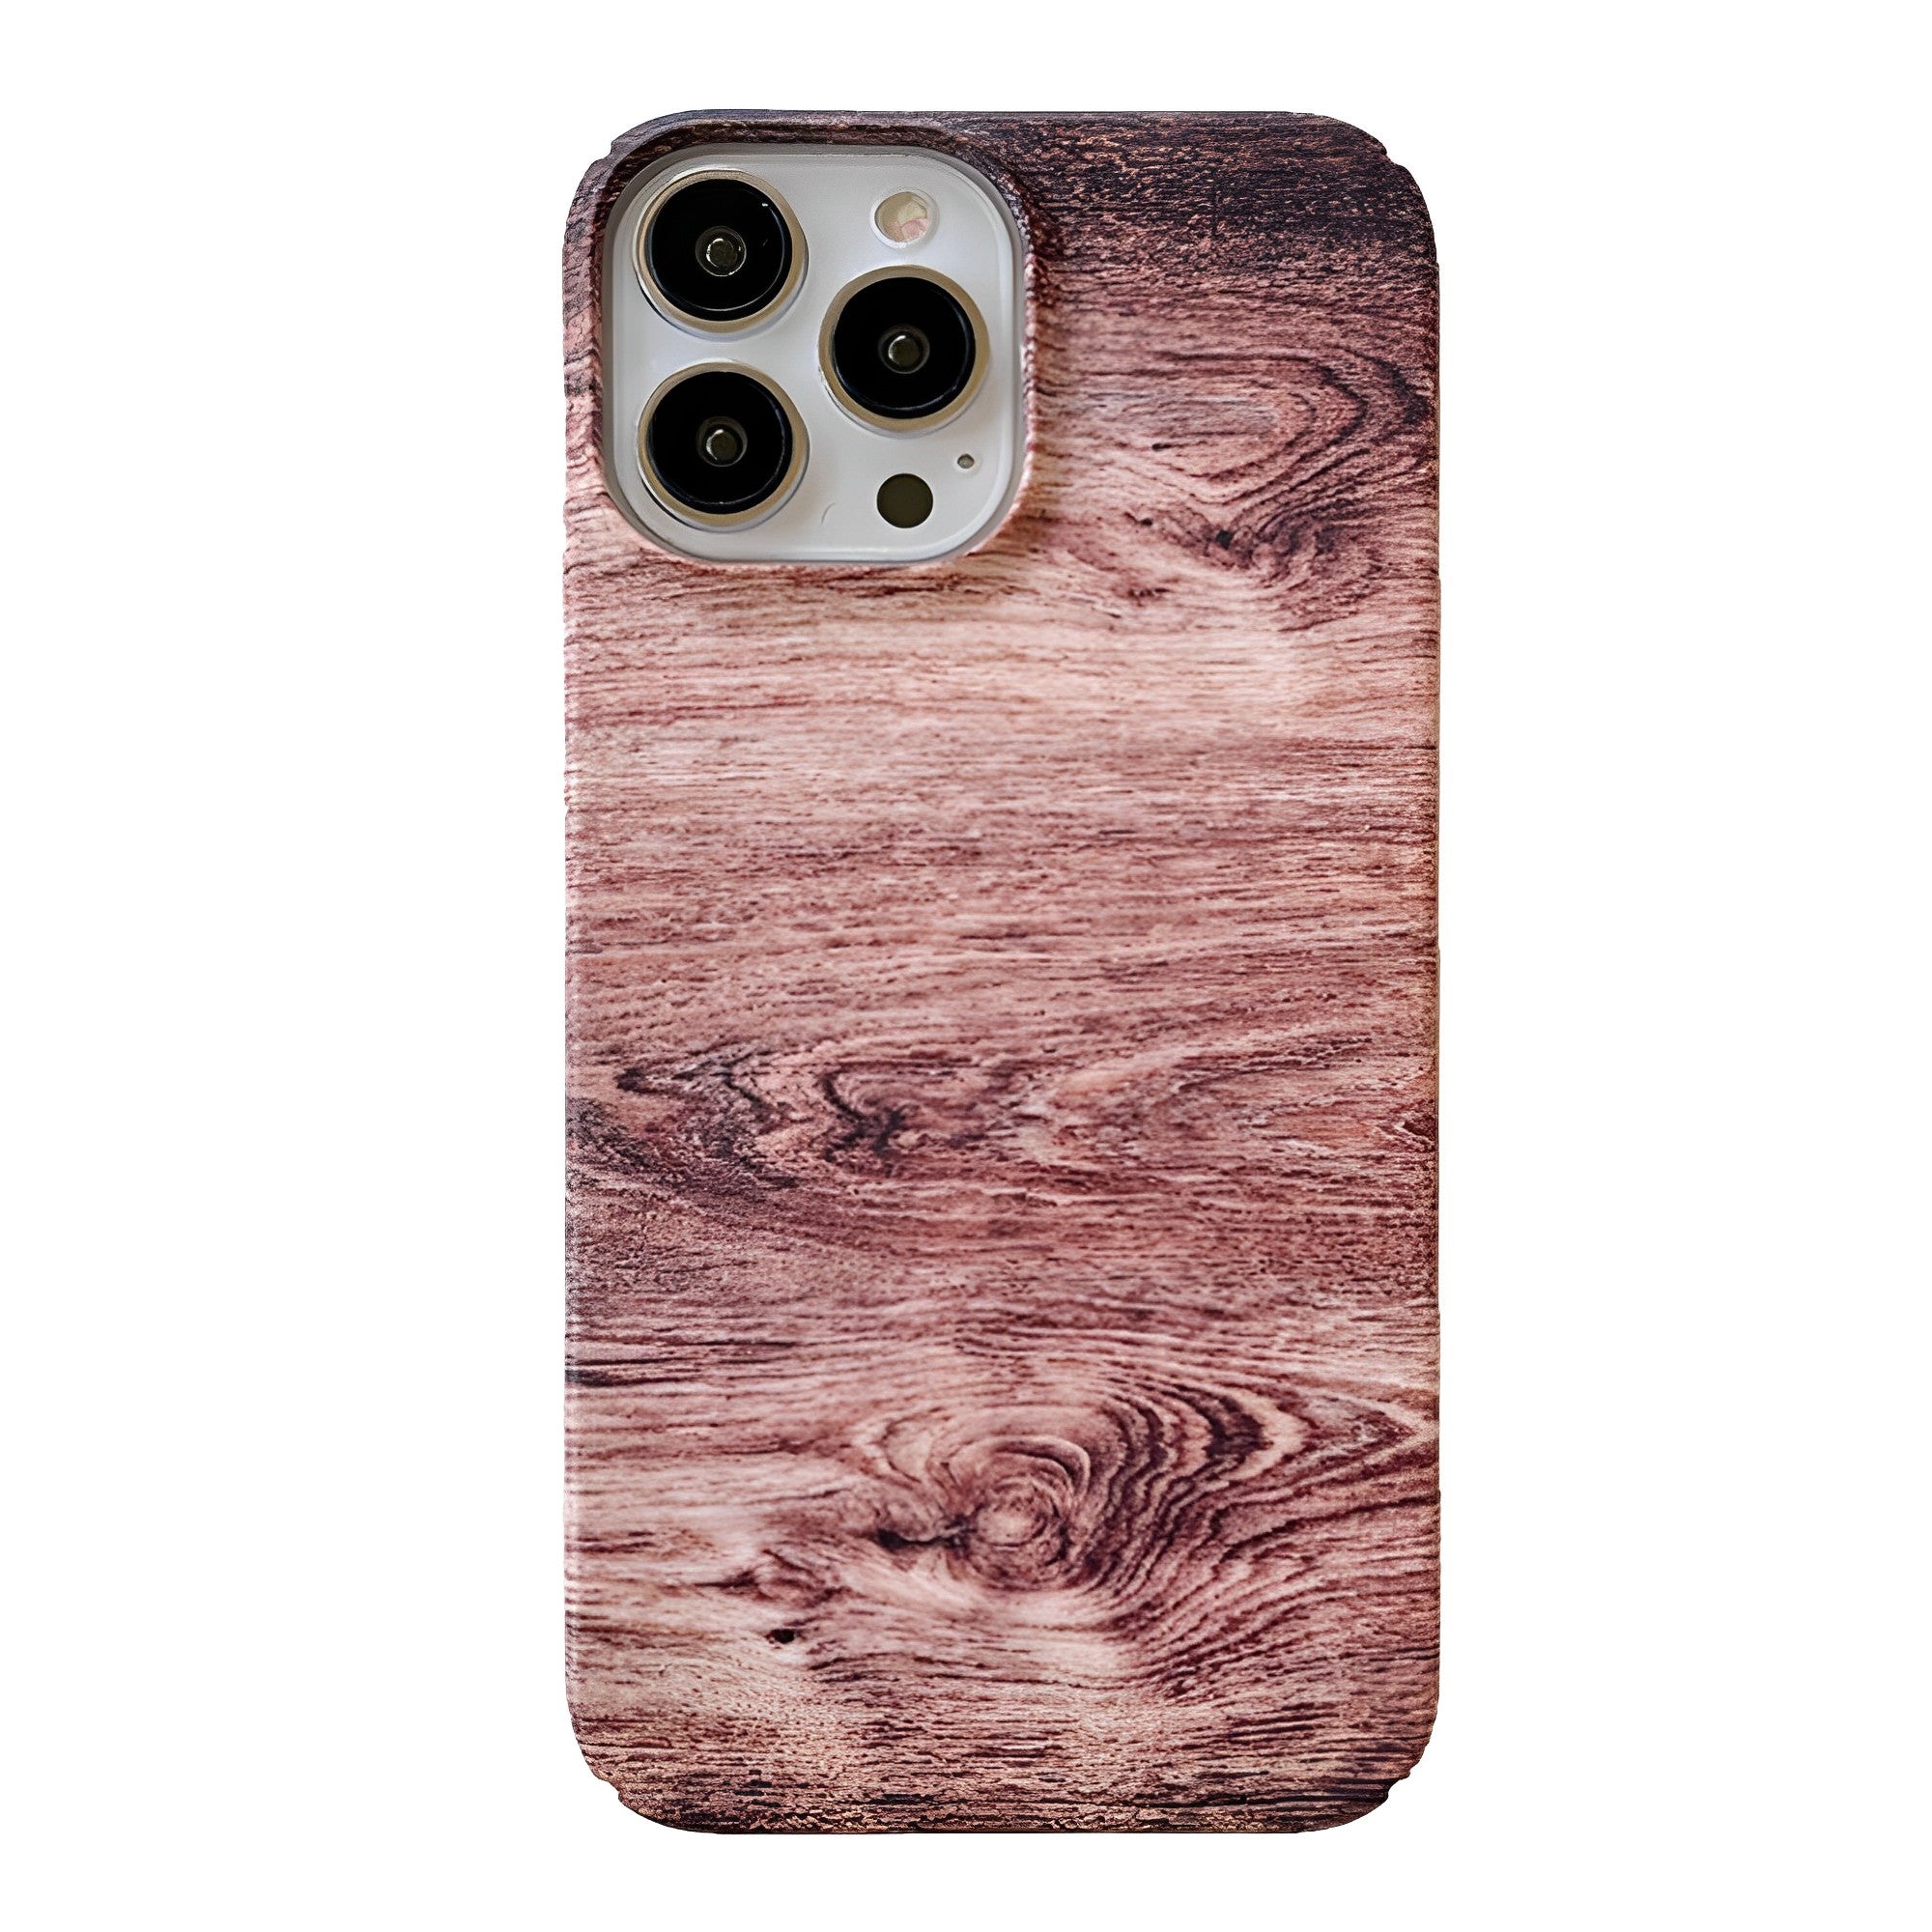 Wood Art iPhone case